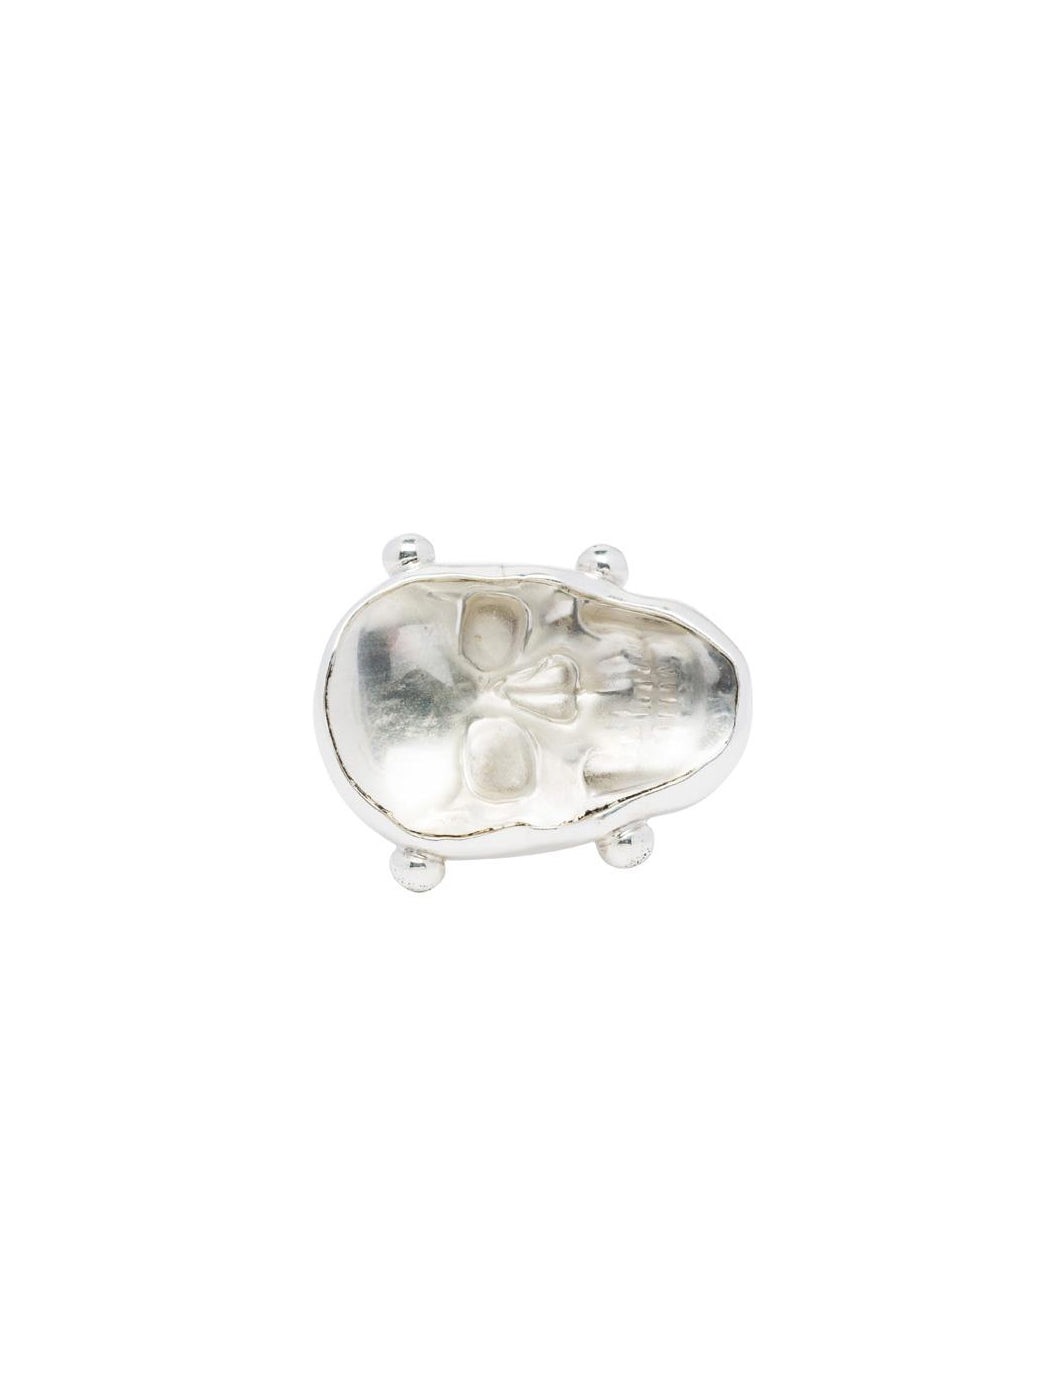 Fiorina Jewellery Crystal Skull Ring